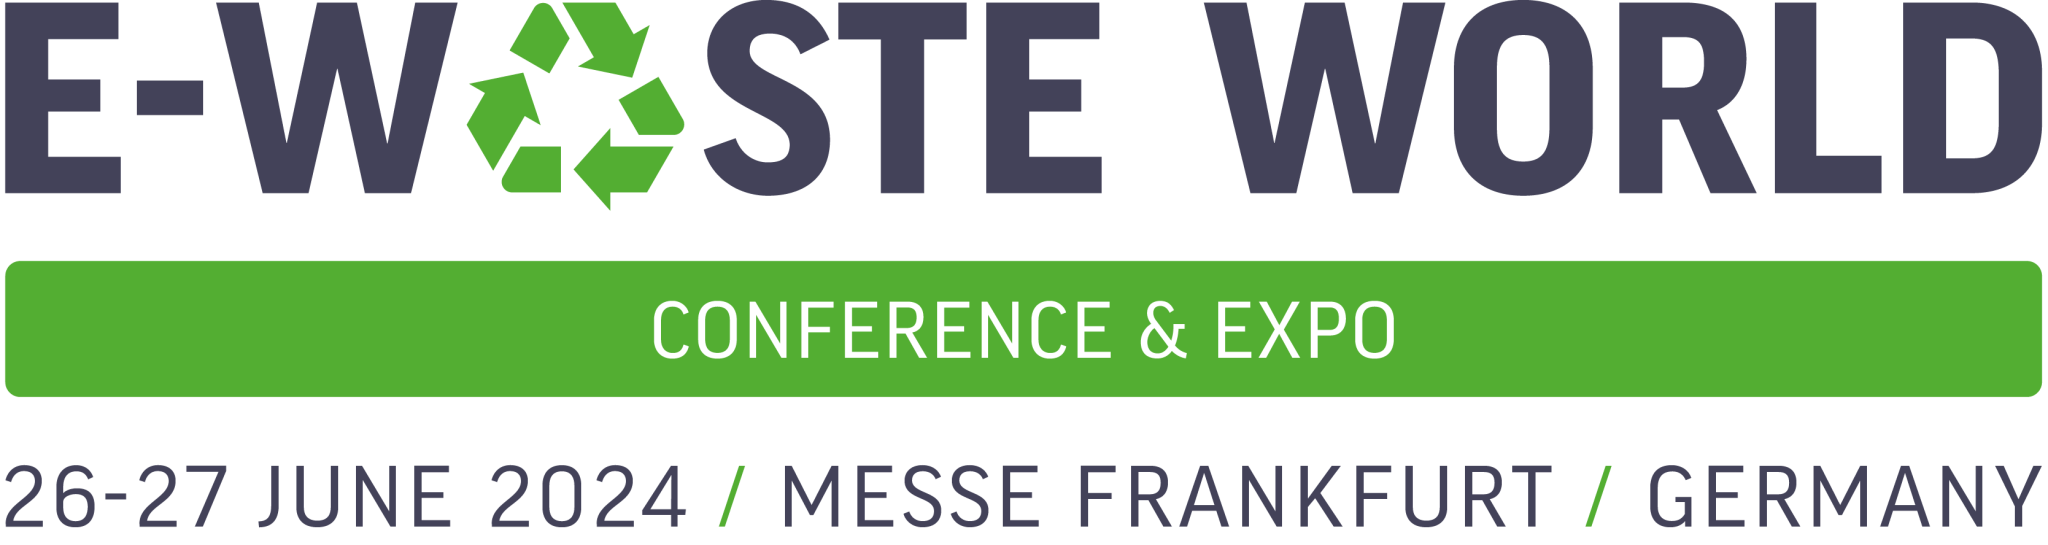 Ewasteworld 2024 Logo 01